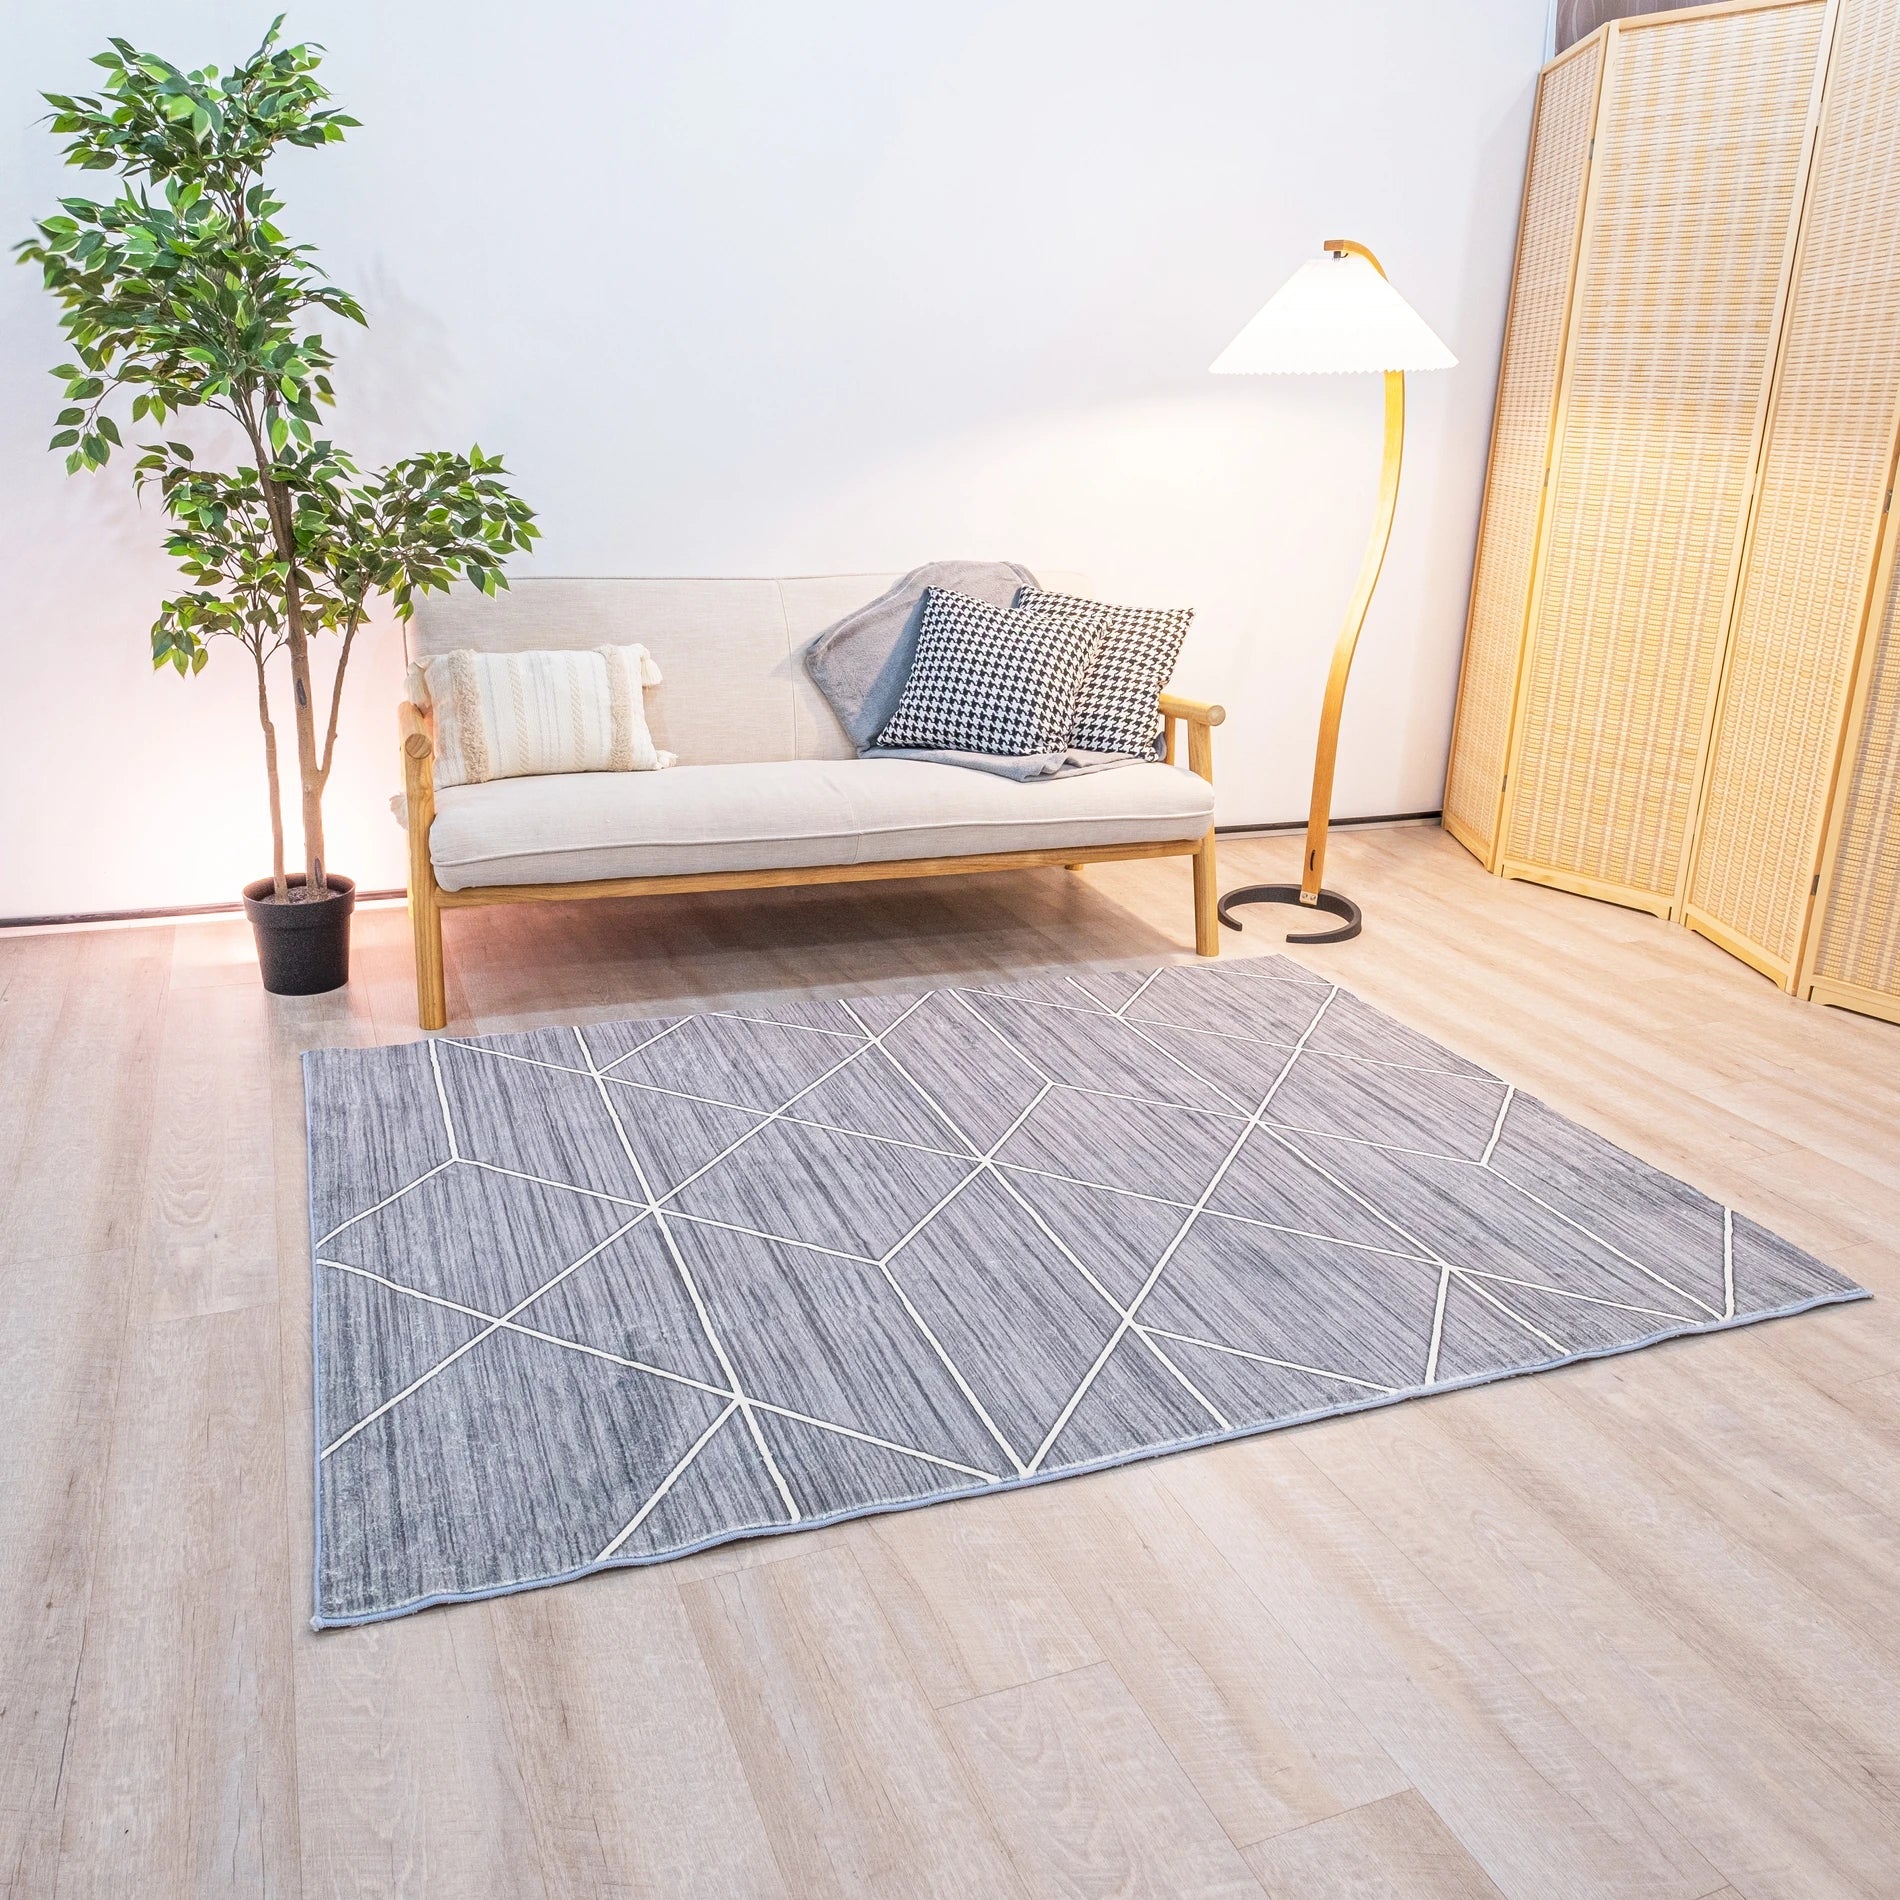 S-4911 Scandinavian Carpet - The Carpetier™